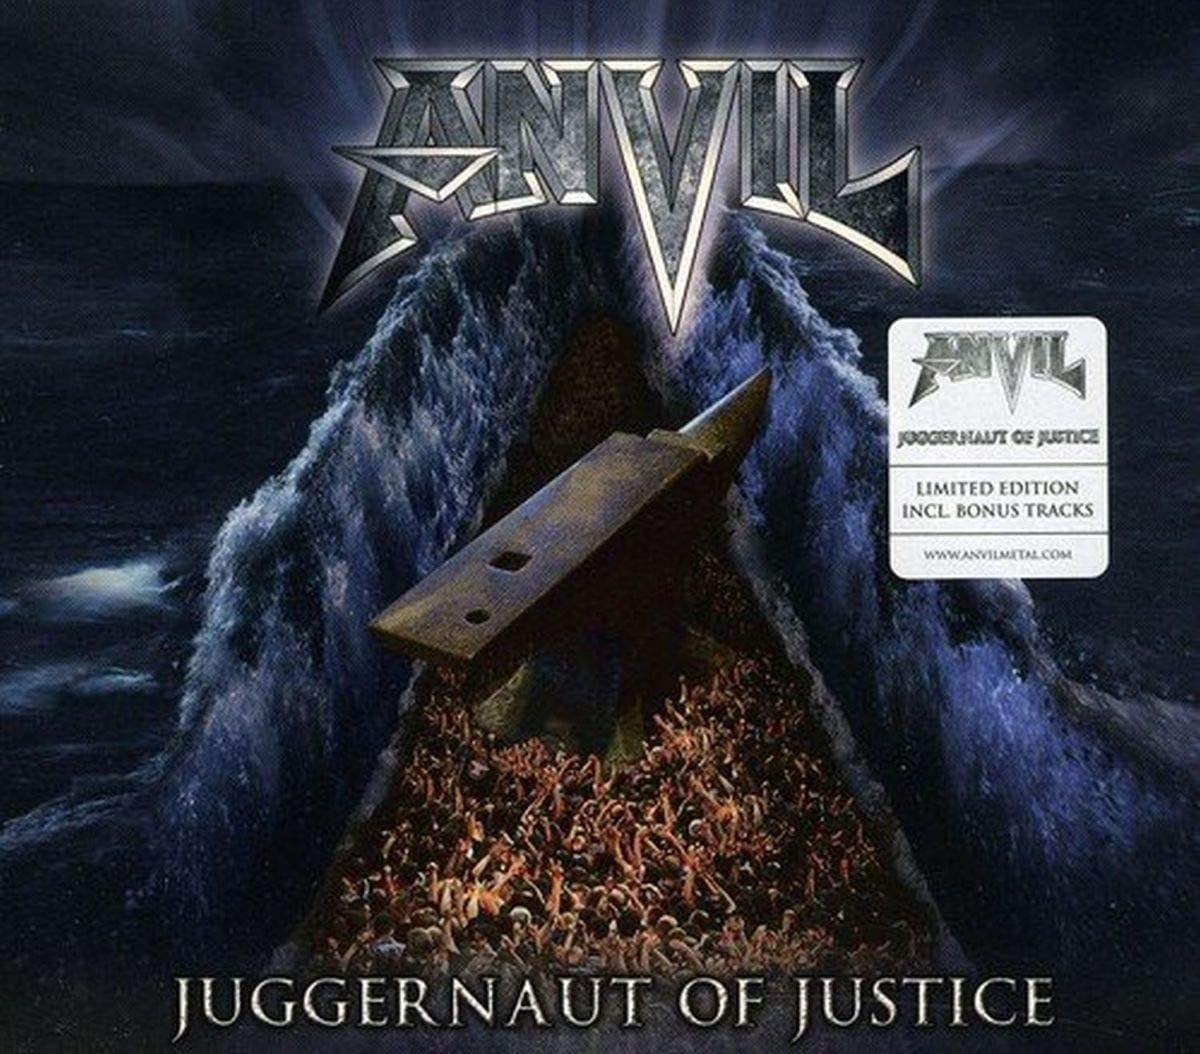 Anvil - Juggernaut Of Justice (Ltd. Ed. digipak with 2 bonus tracks) - CD - New